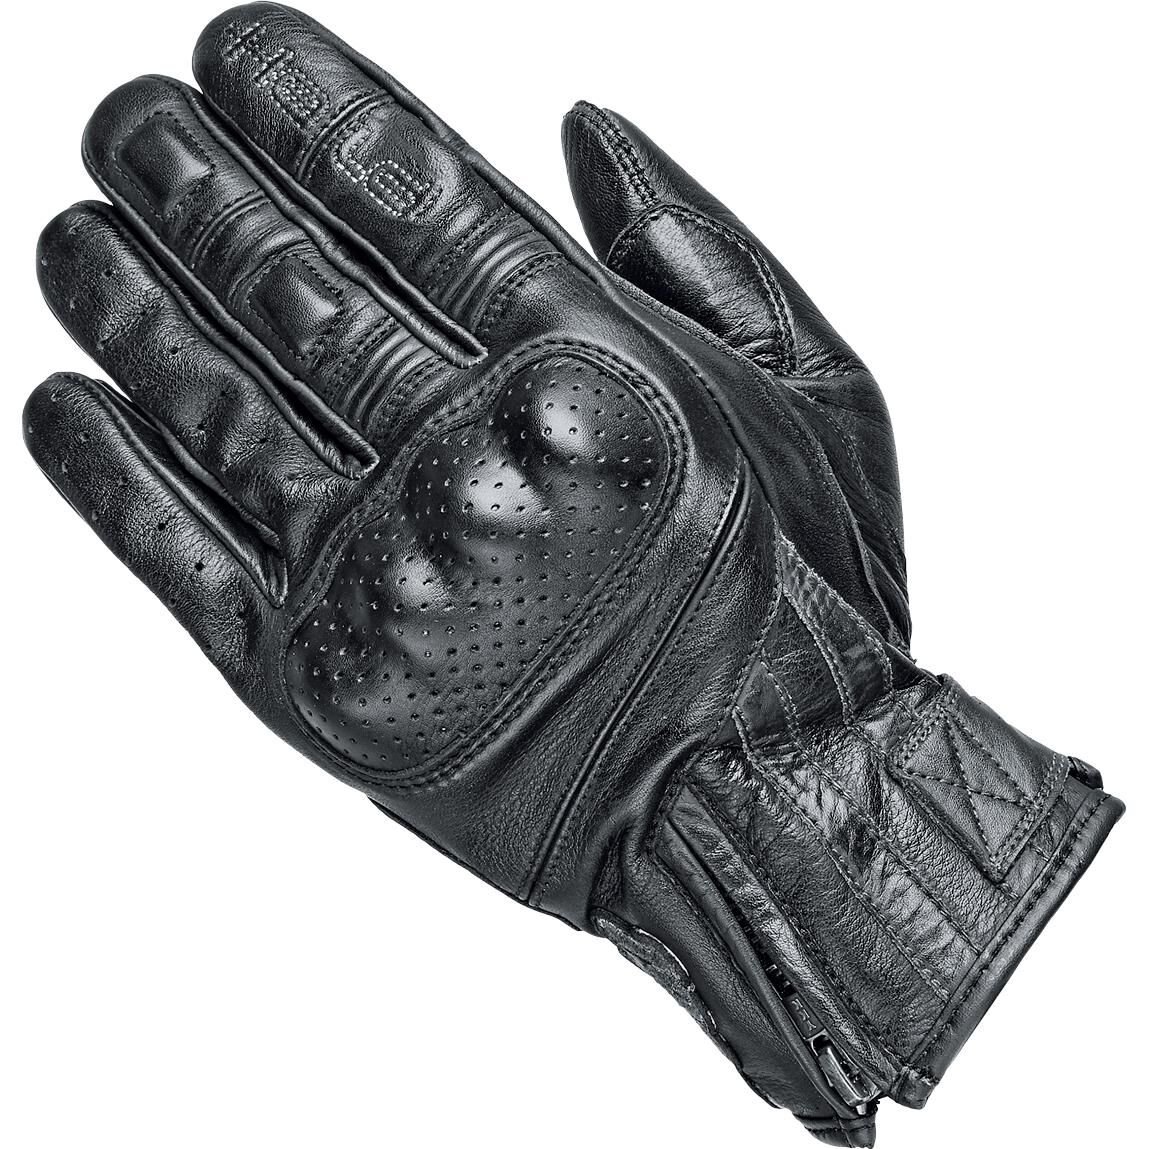 Held Paxton Handschuh schwarz 11 Herren von held